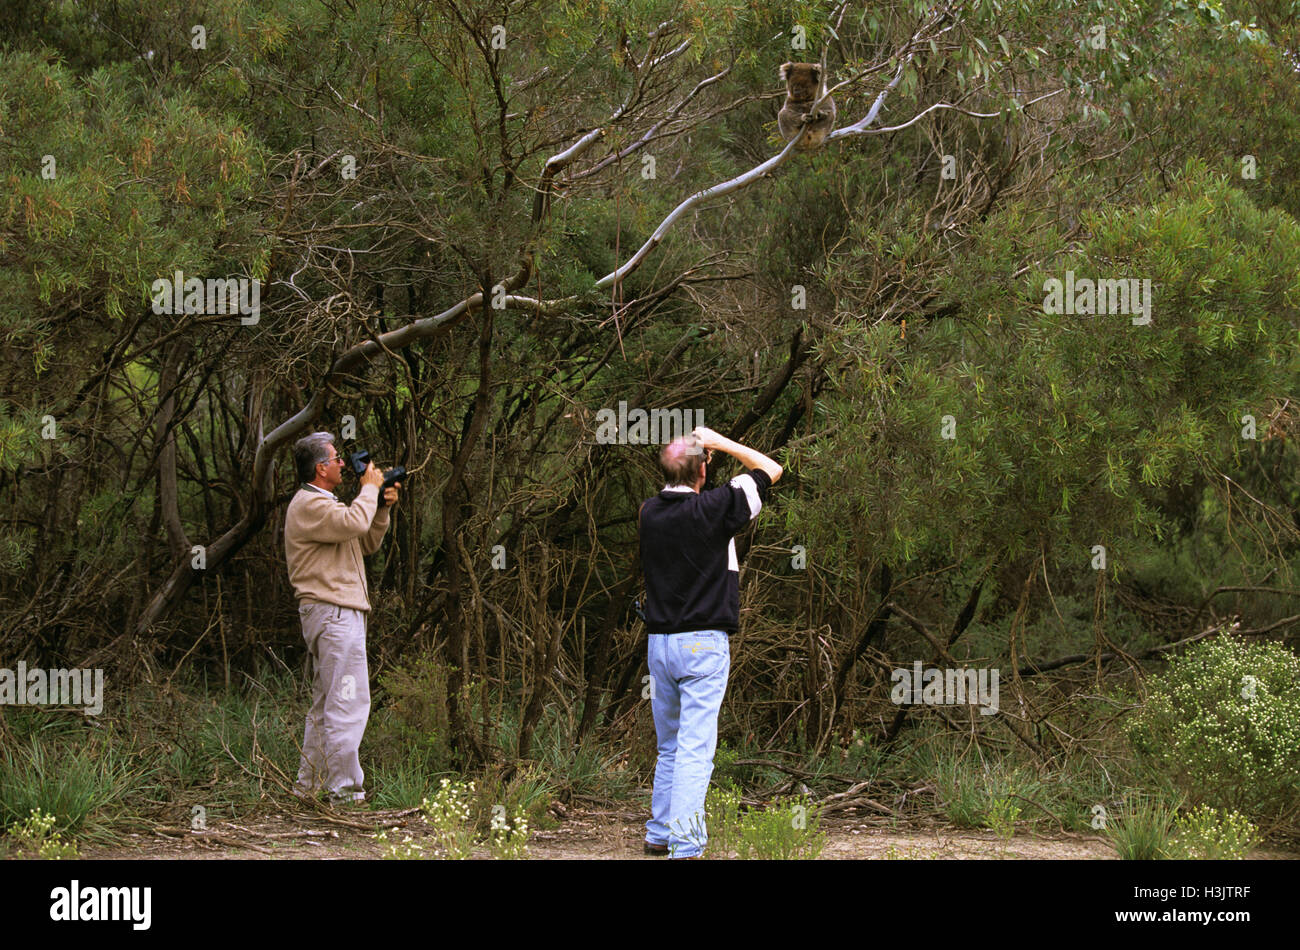 Koala (Phascolarctos Cinereus) Stockfoto